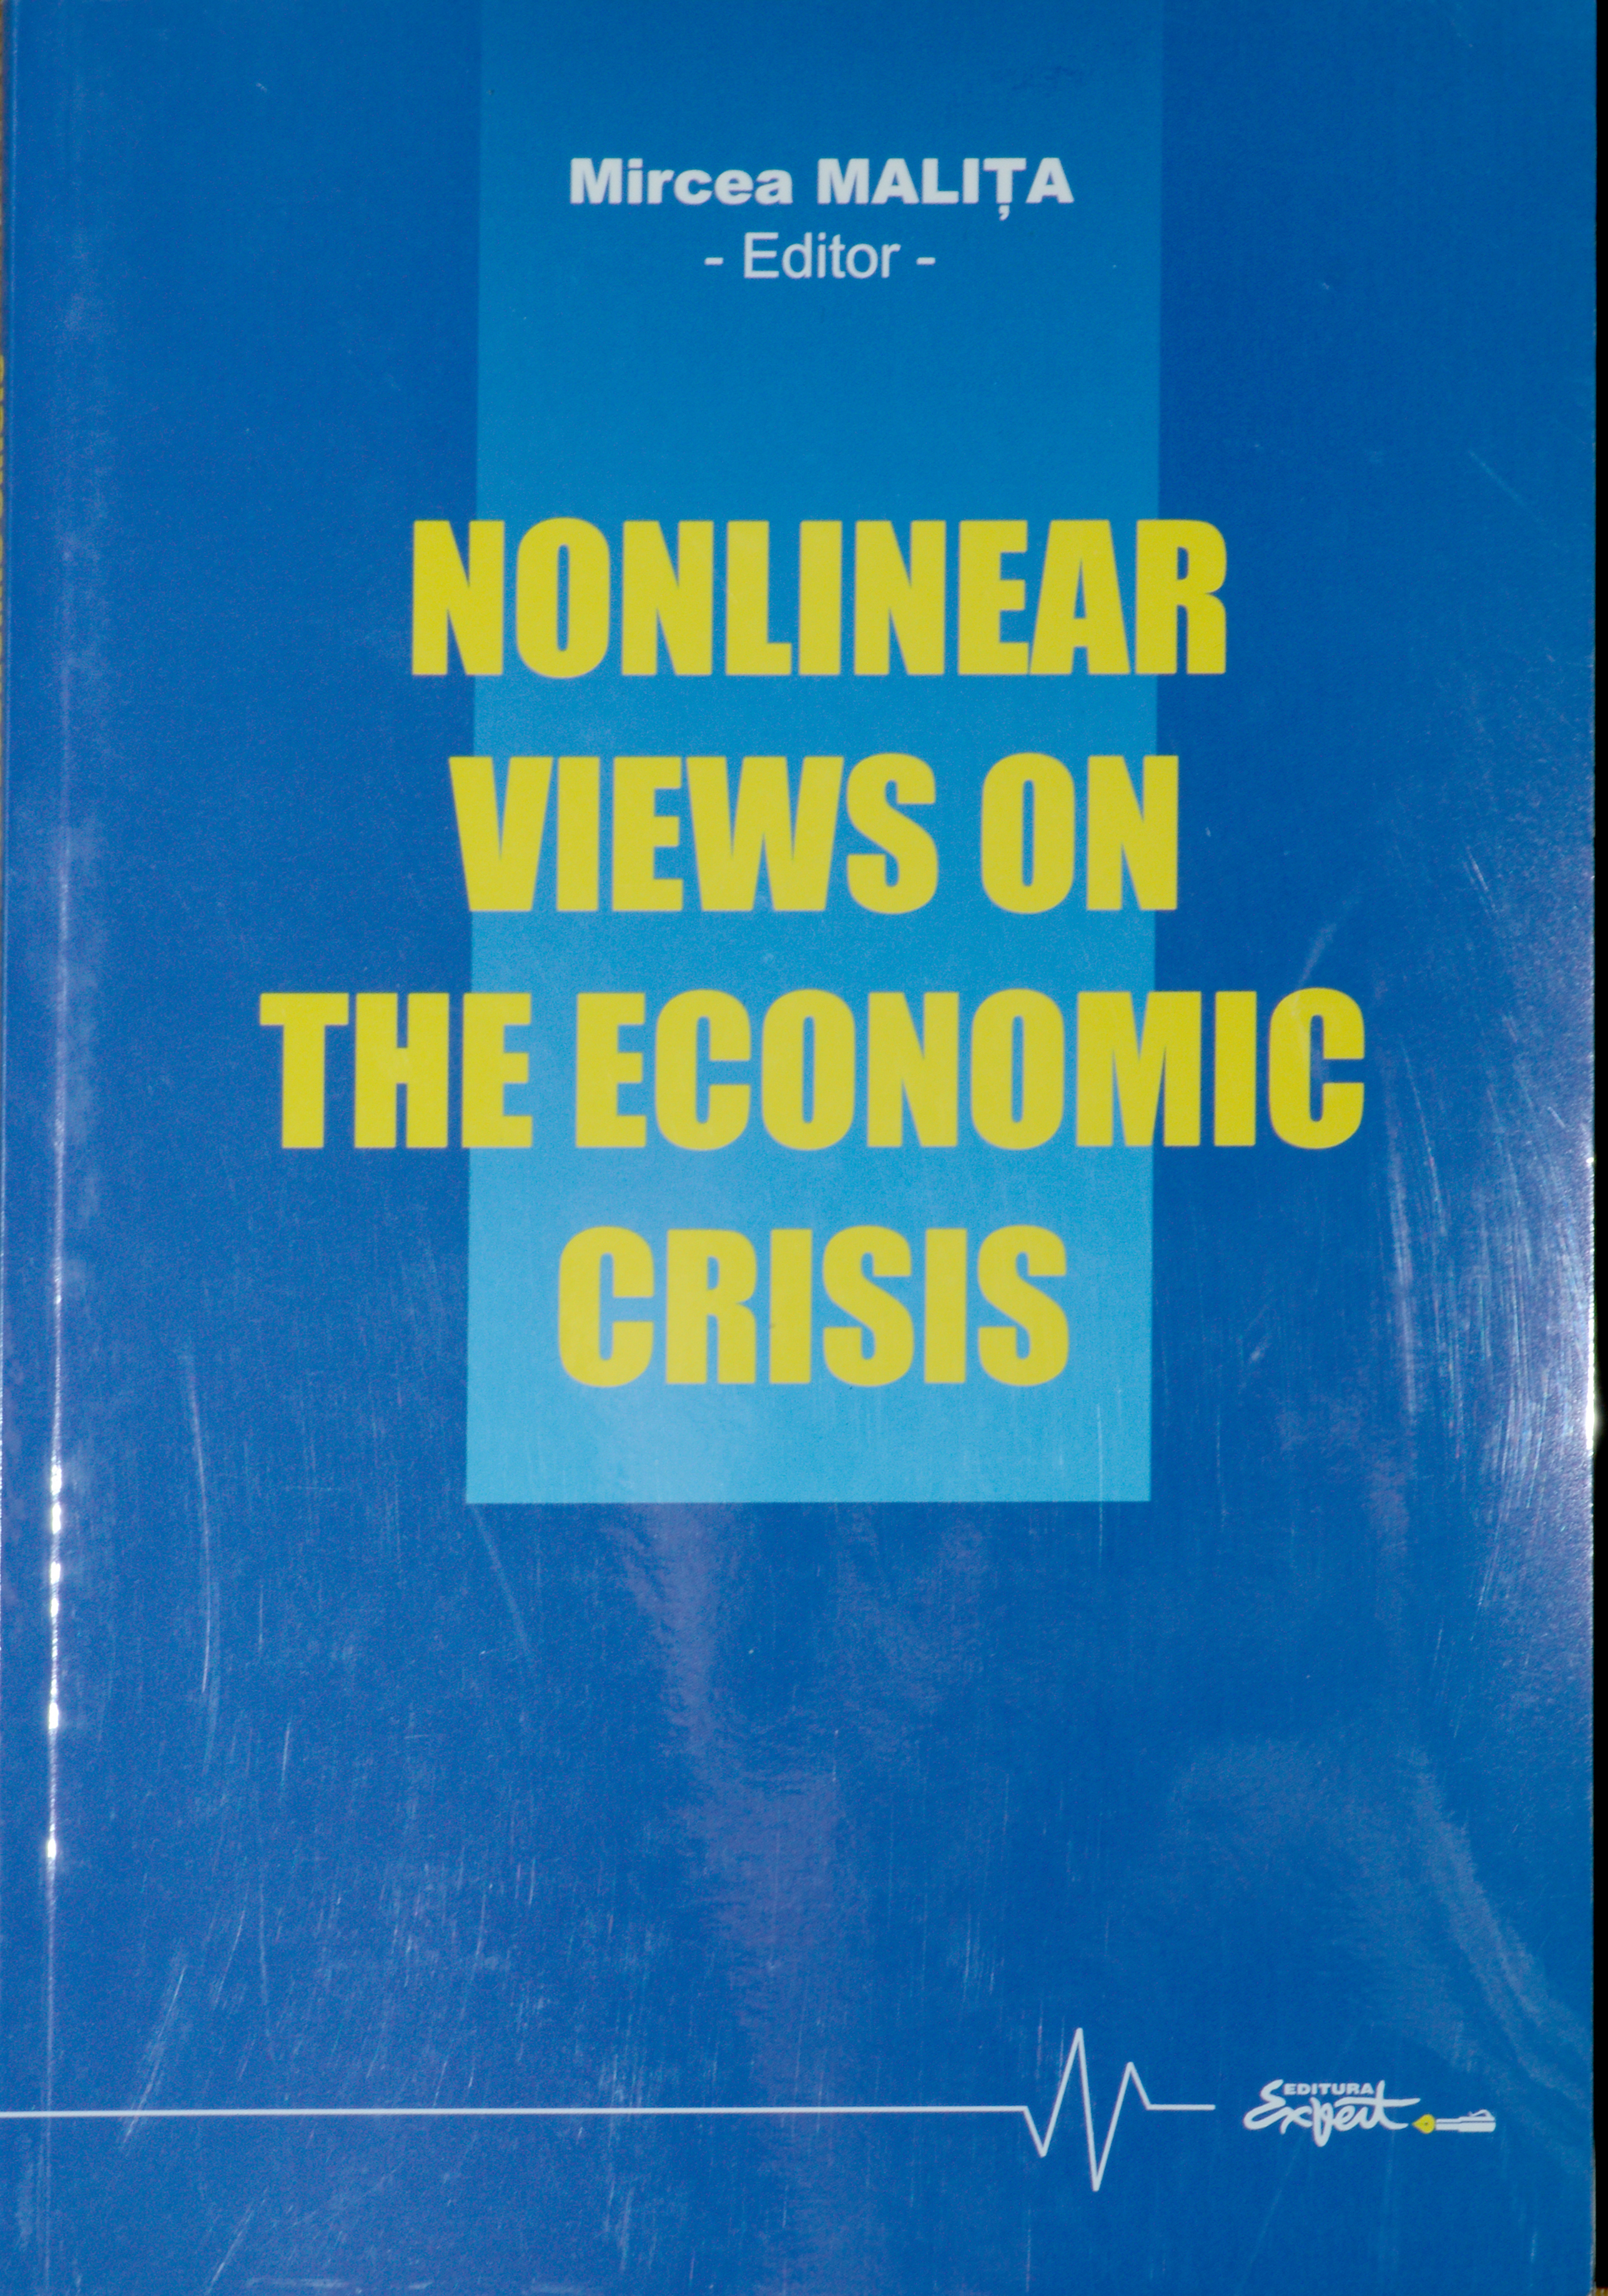 Nonlinear views on the economic crisis